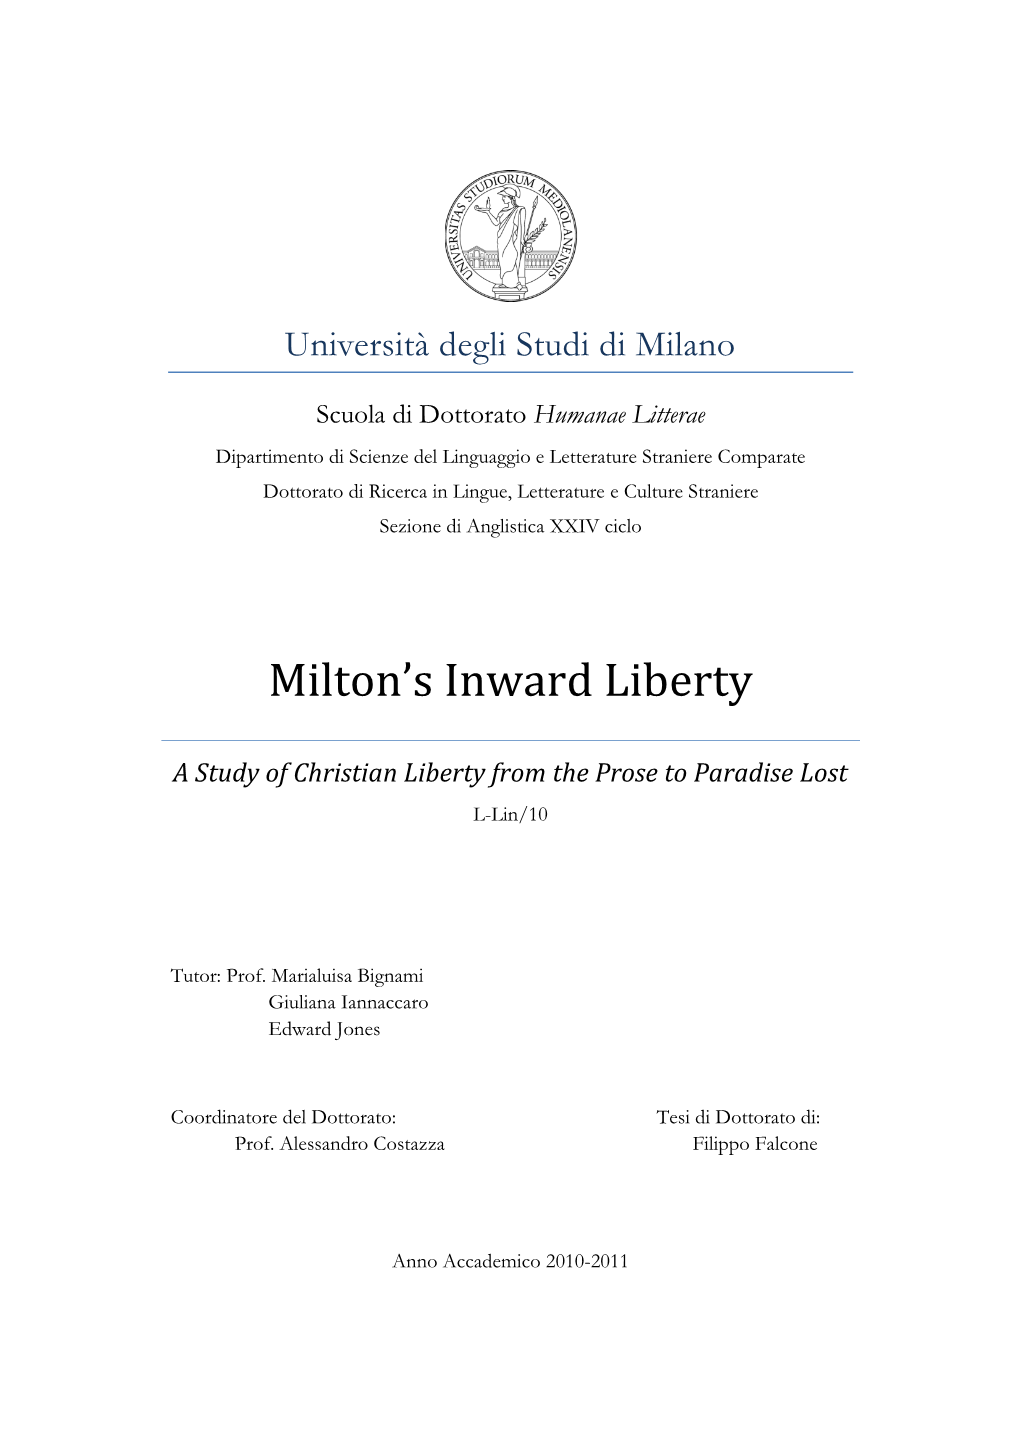 Milton's Inward Liberty